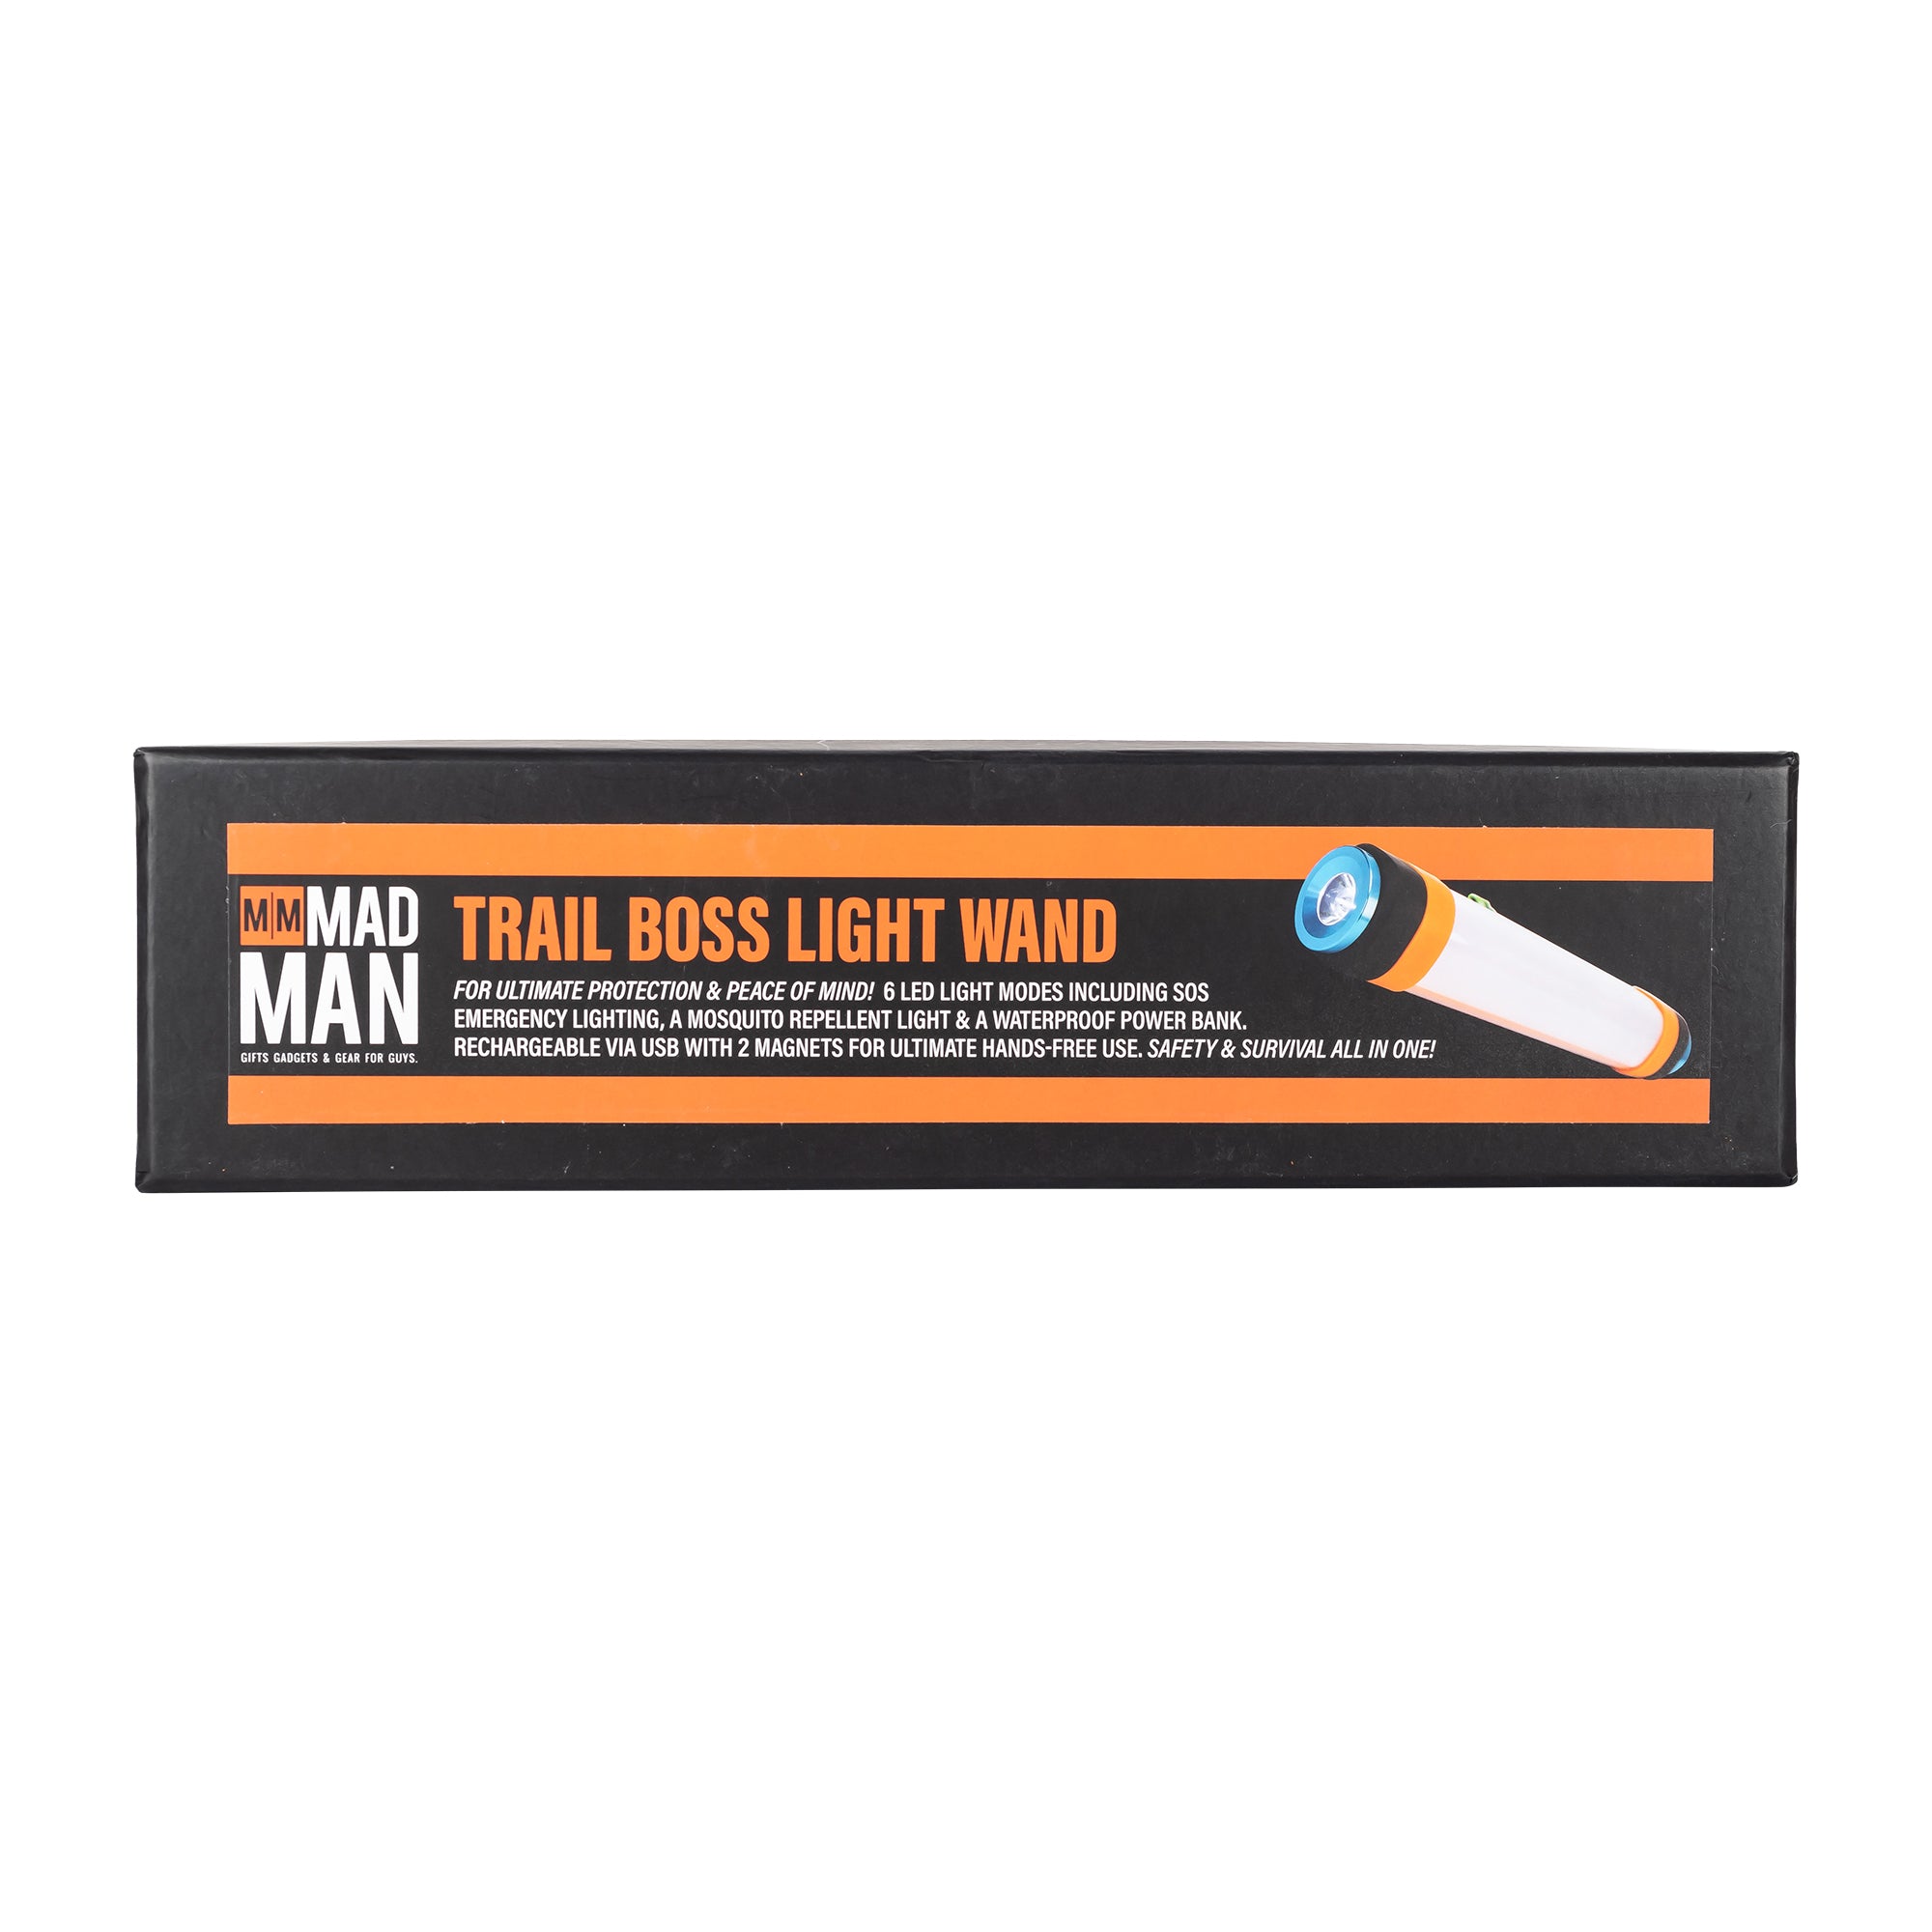 Trail Boss Light Wand